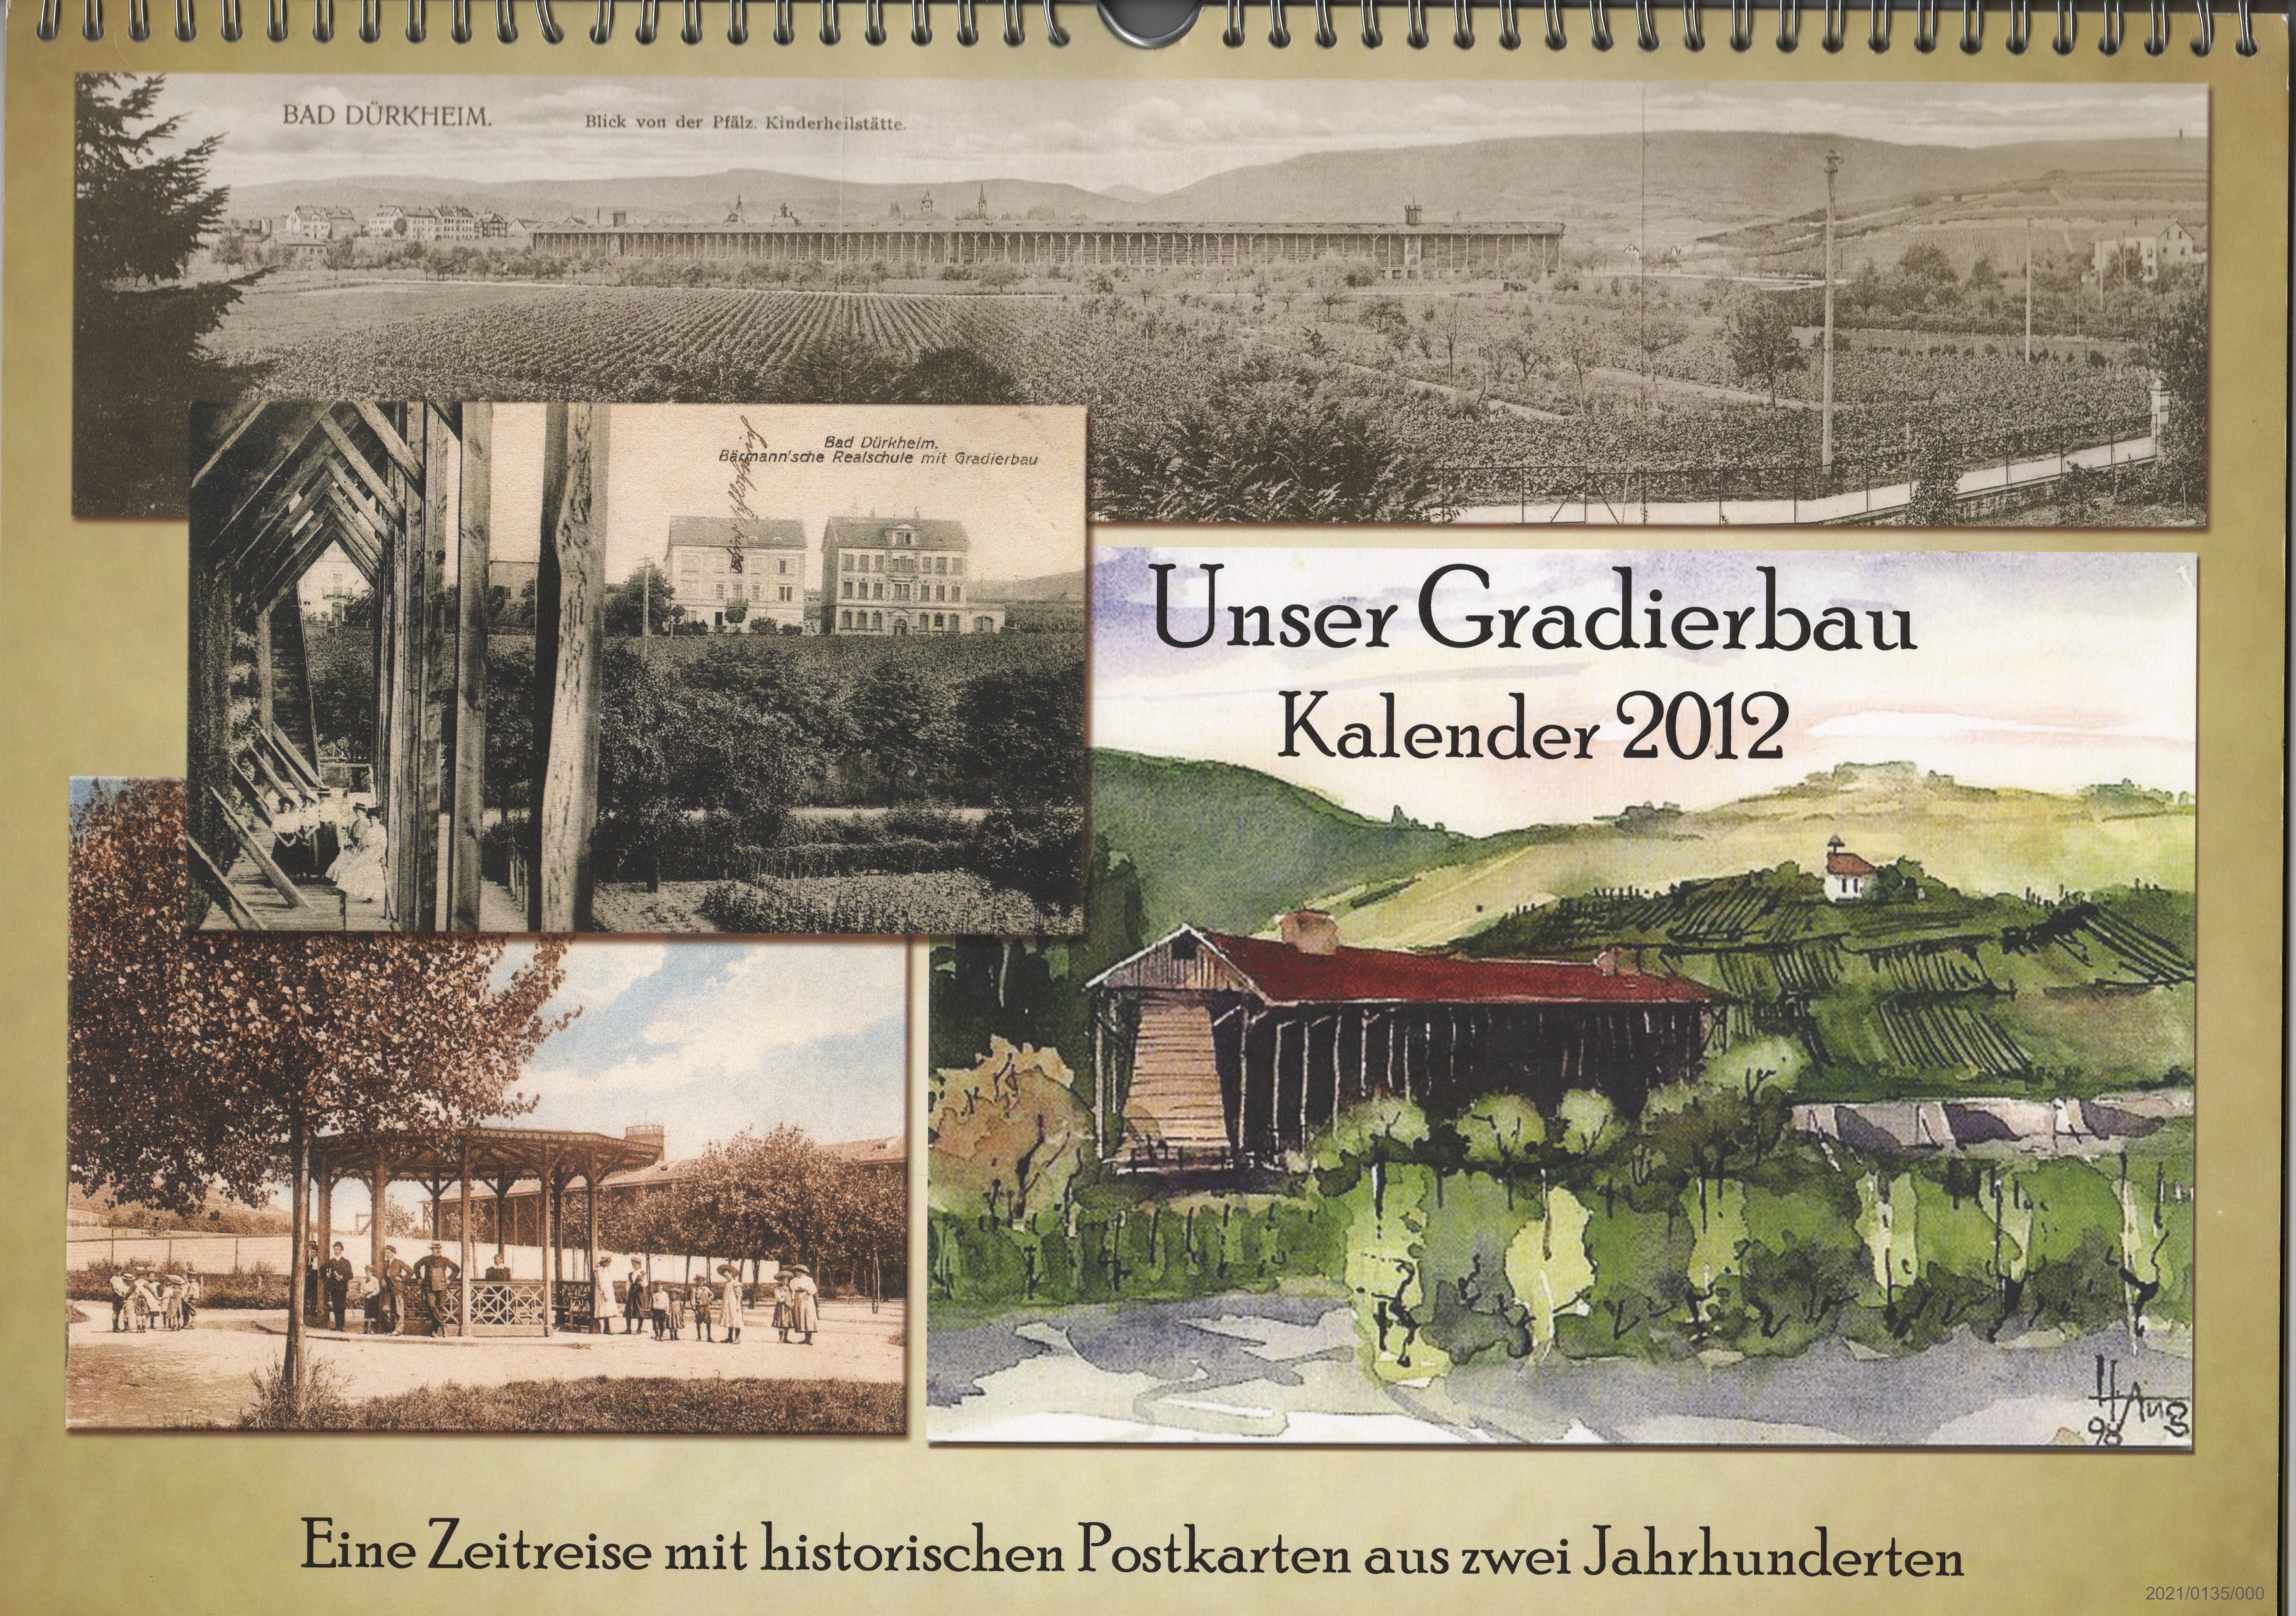 Unser Gradierbau Kalender 2012 Deckblatt, Übersichtsblatt, Impressum (Museumsgesellschaft Bad Dürkheim e. V. CC BY-NC-SA)